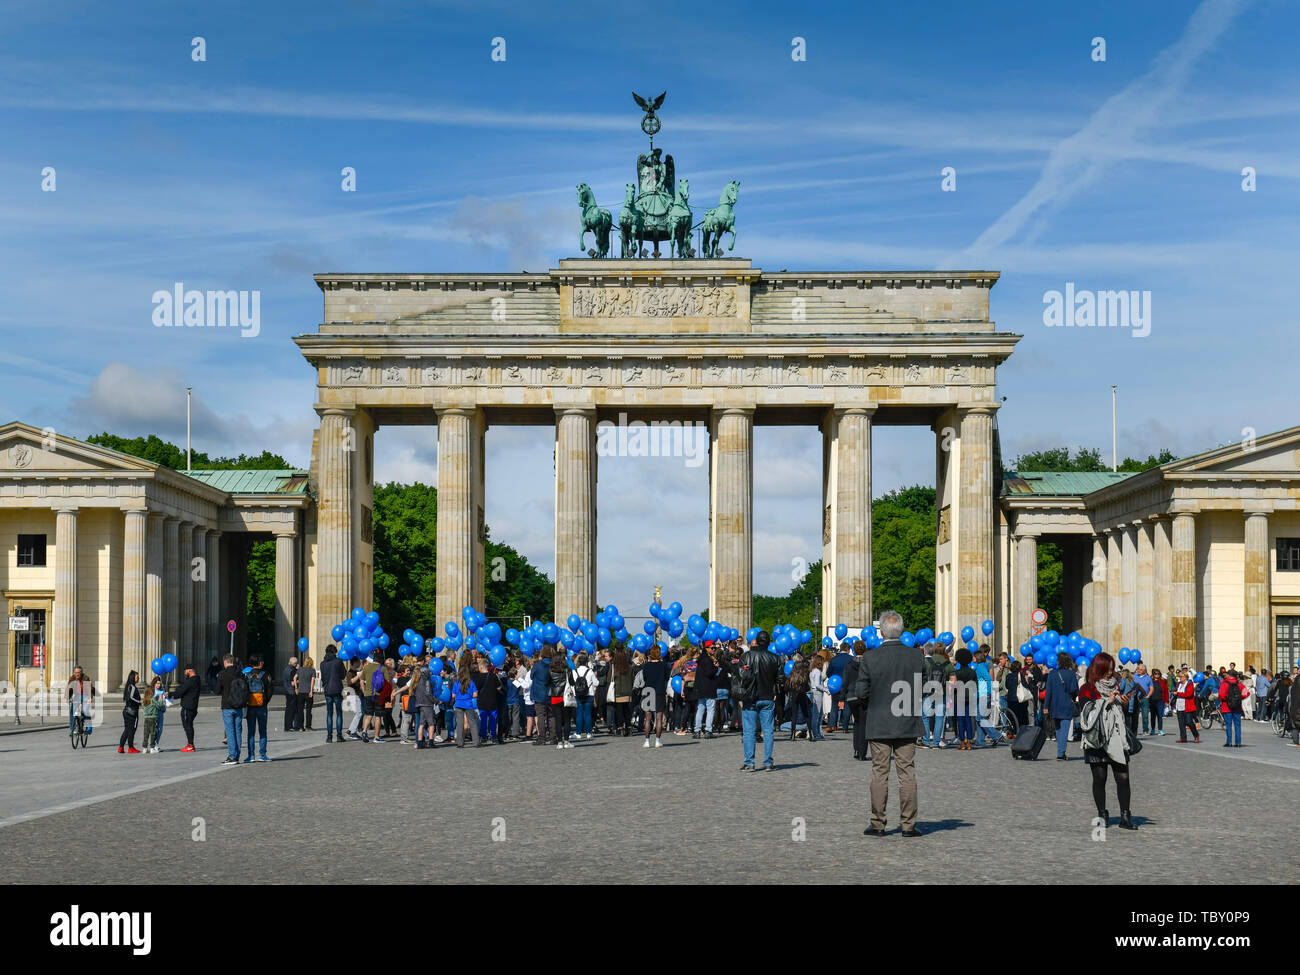 La Porta di Brandeburgo, Paris Place, medio, Berlino, Germania, Brandenburger Tor, Pariser Platz, Mitte, Deutschland Foto Stock